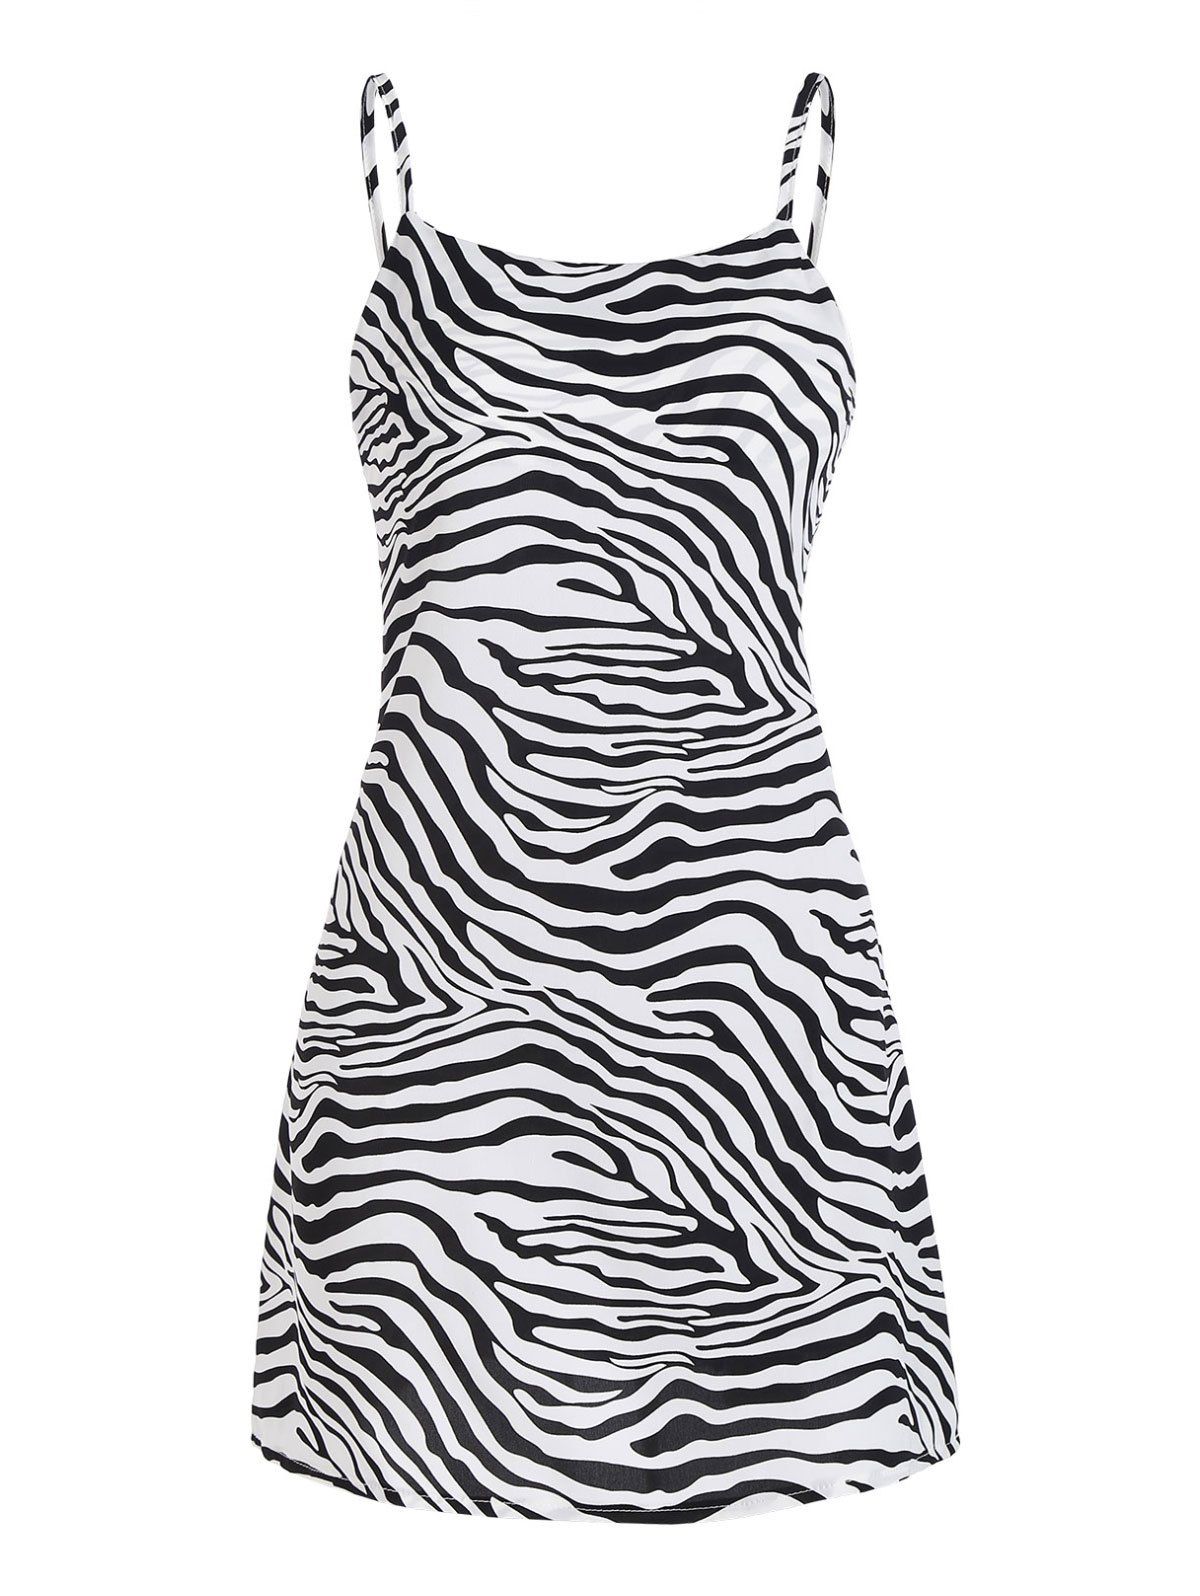 Zebra Animal Print Mini Slip Dress - BLACK XL